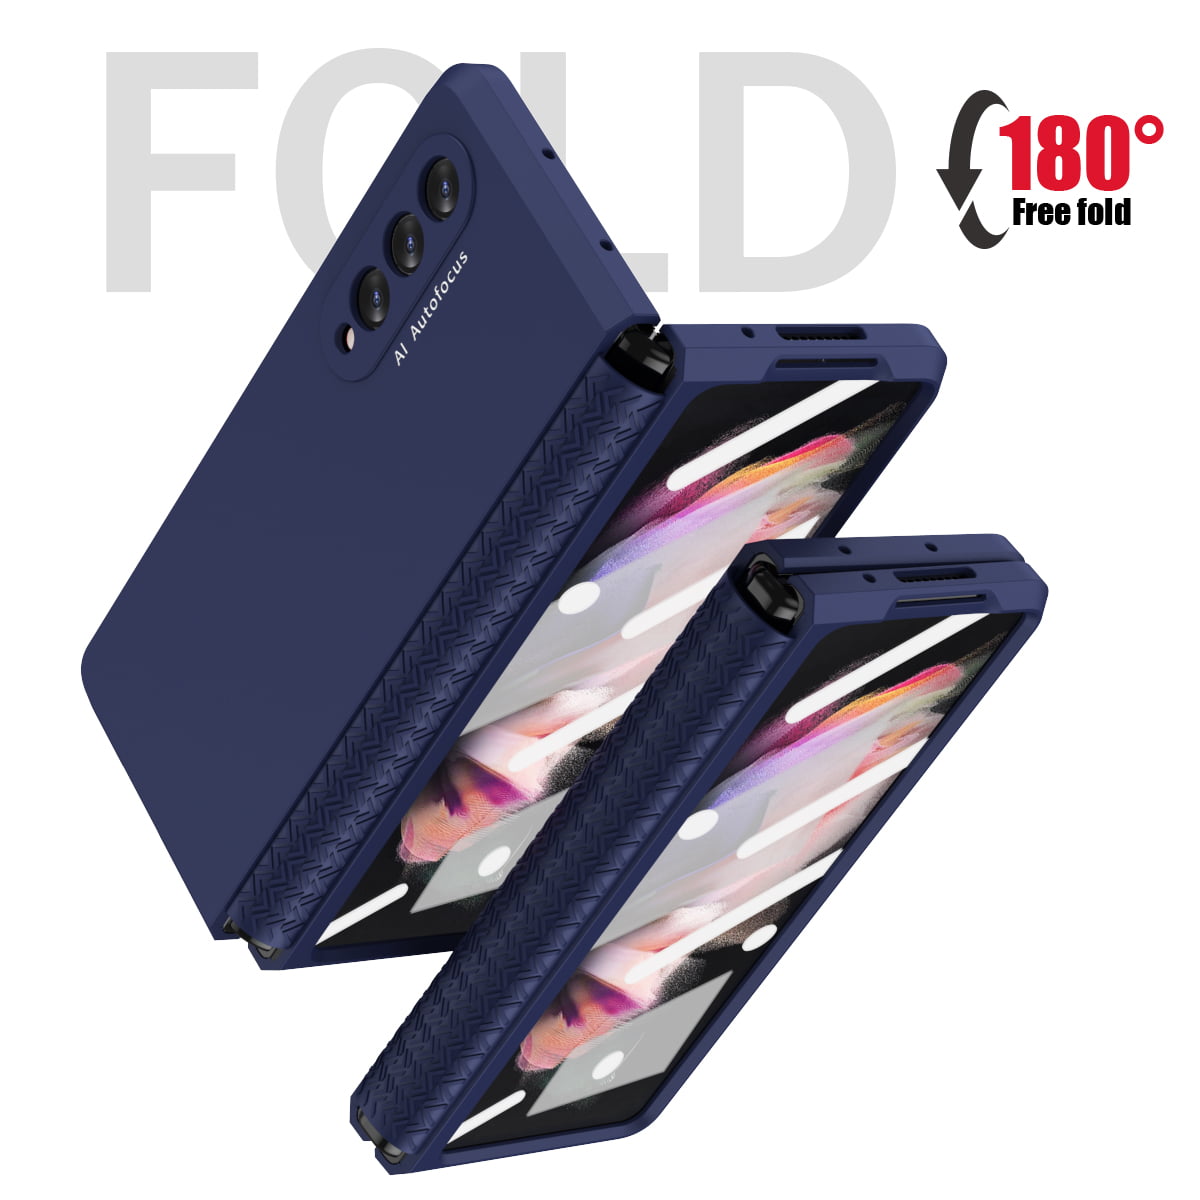  Funda para Samsung Galaxy Z Flip Case Cover, Retro PU Leather  Ultra Slim Funda a prueba de golpes para Samsung SM-F700U/DS Galaxy Z Flip/SM-F700U  SM-F700N SM-F700J SM-F700F SM-F700F/DS SM-F700J/DS Funda amarilla 